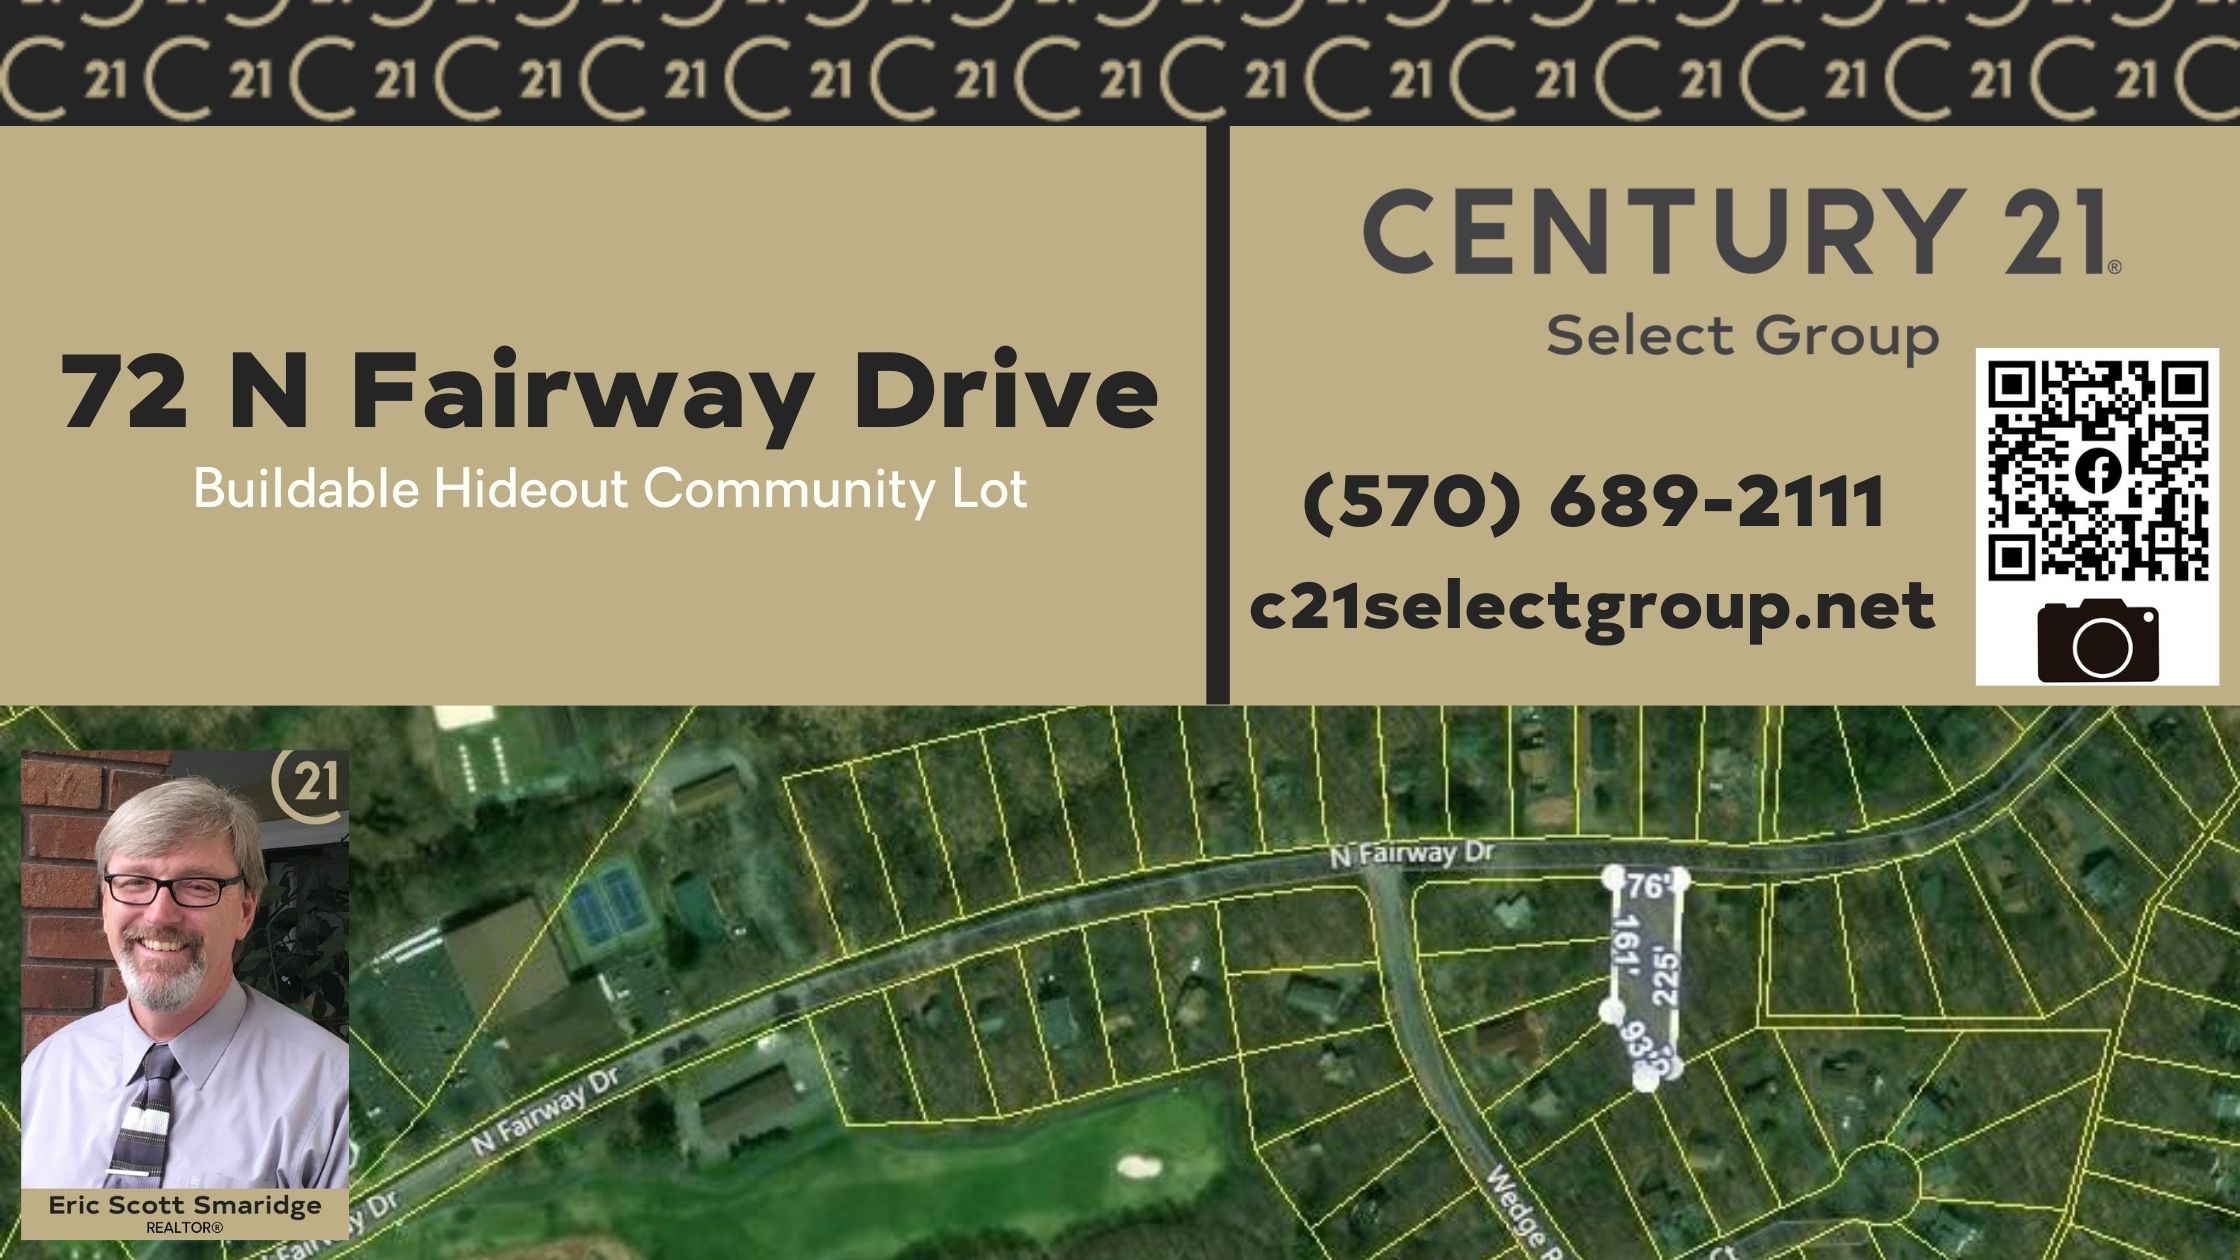 72 N Fairway Drive: Buildable Hideout Community Lot